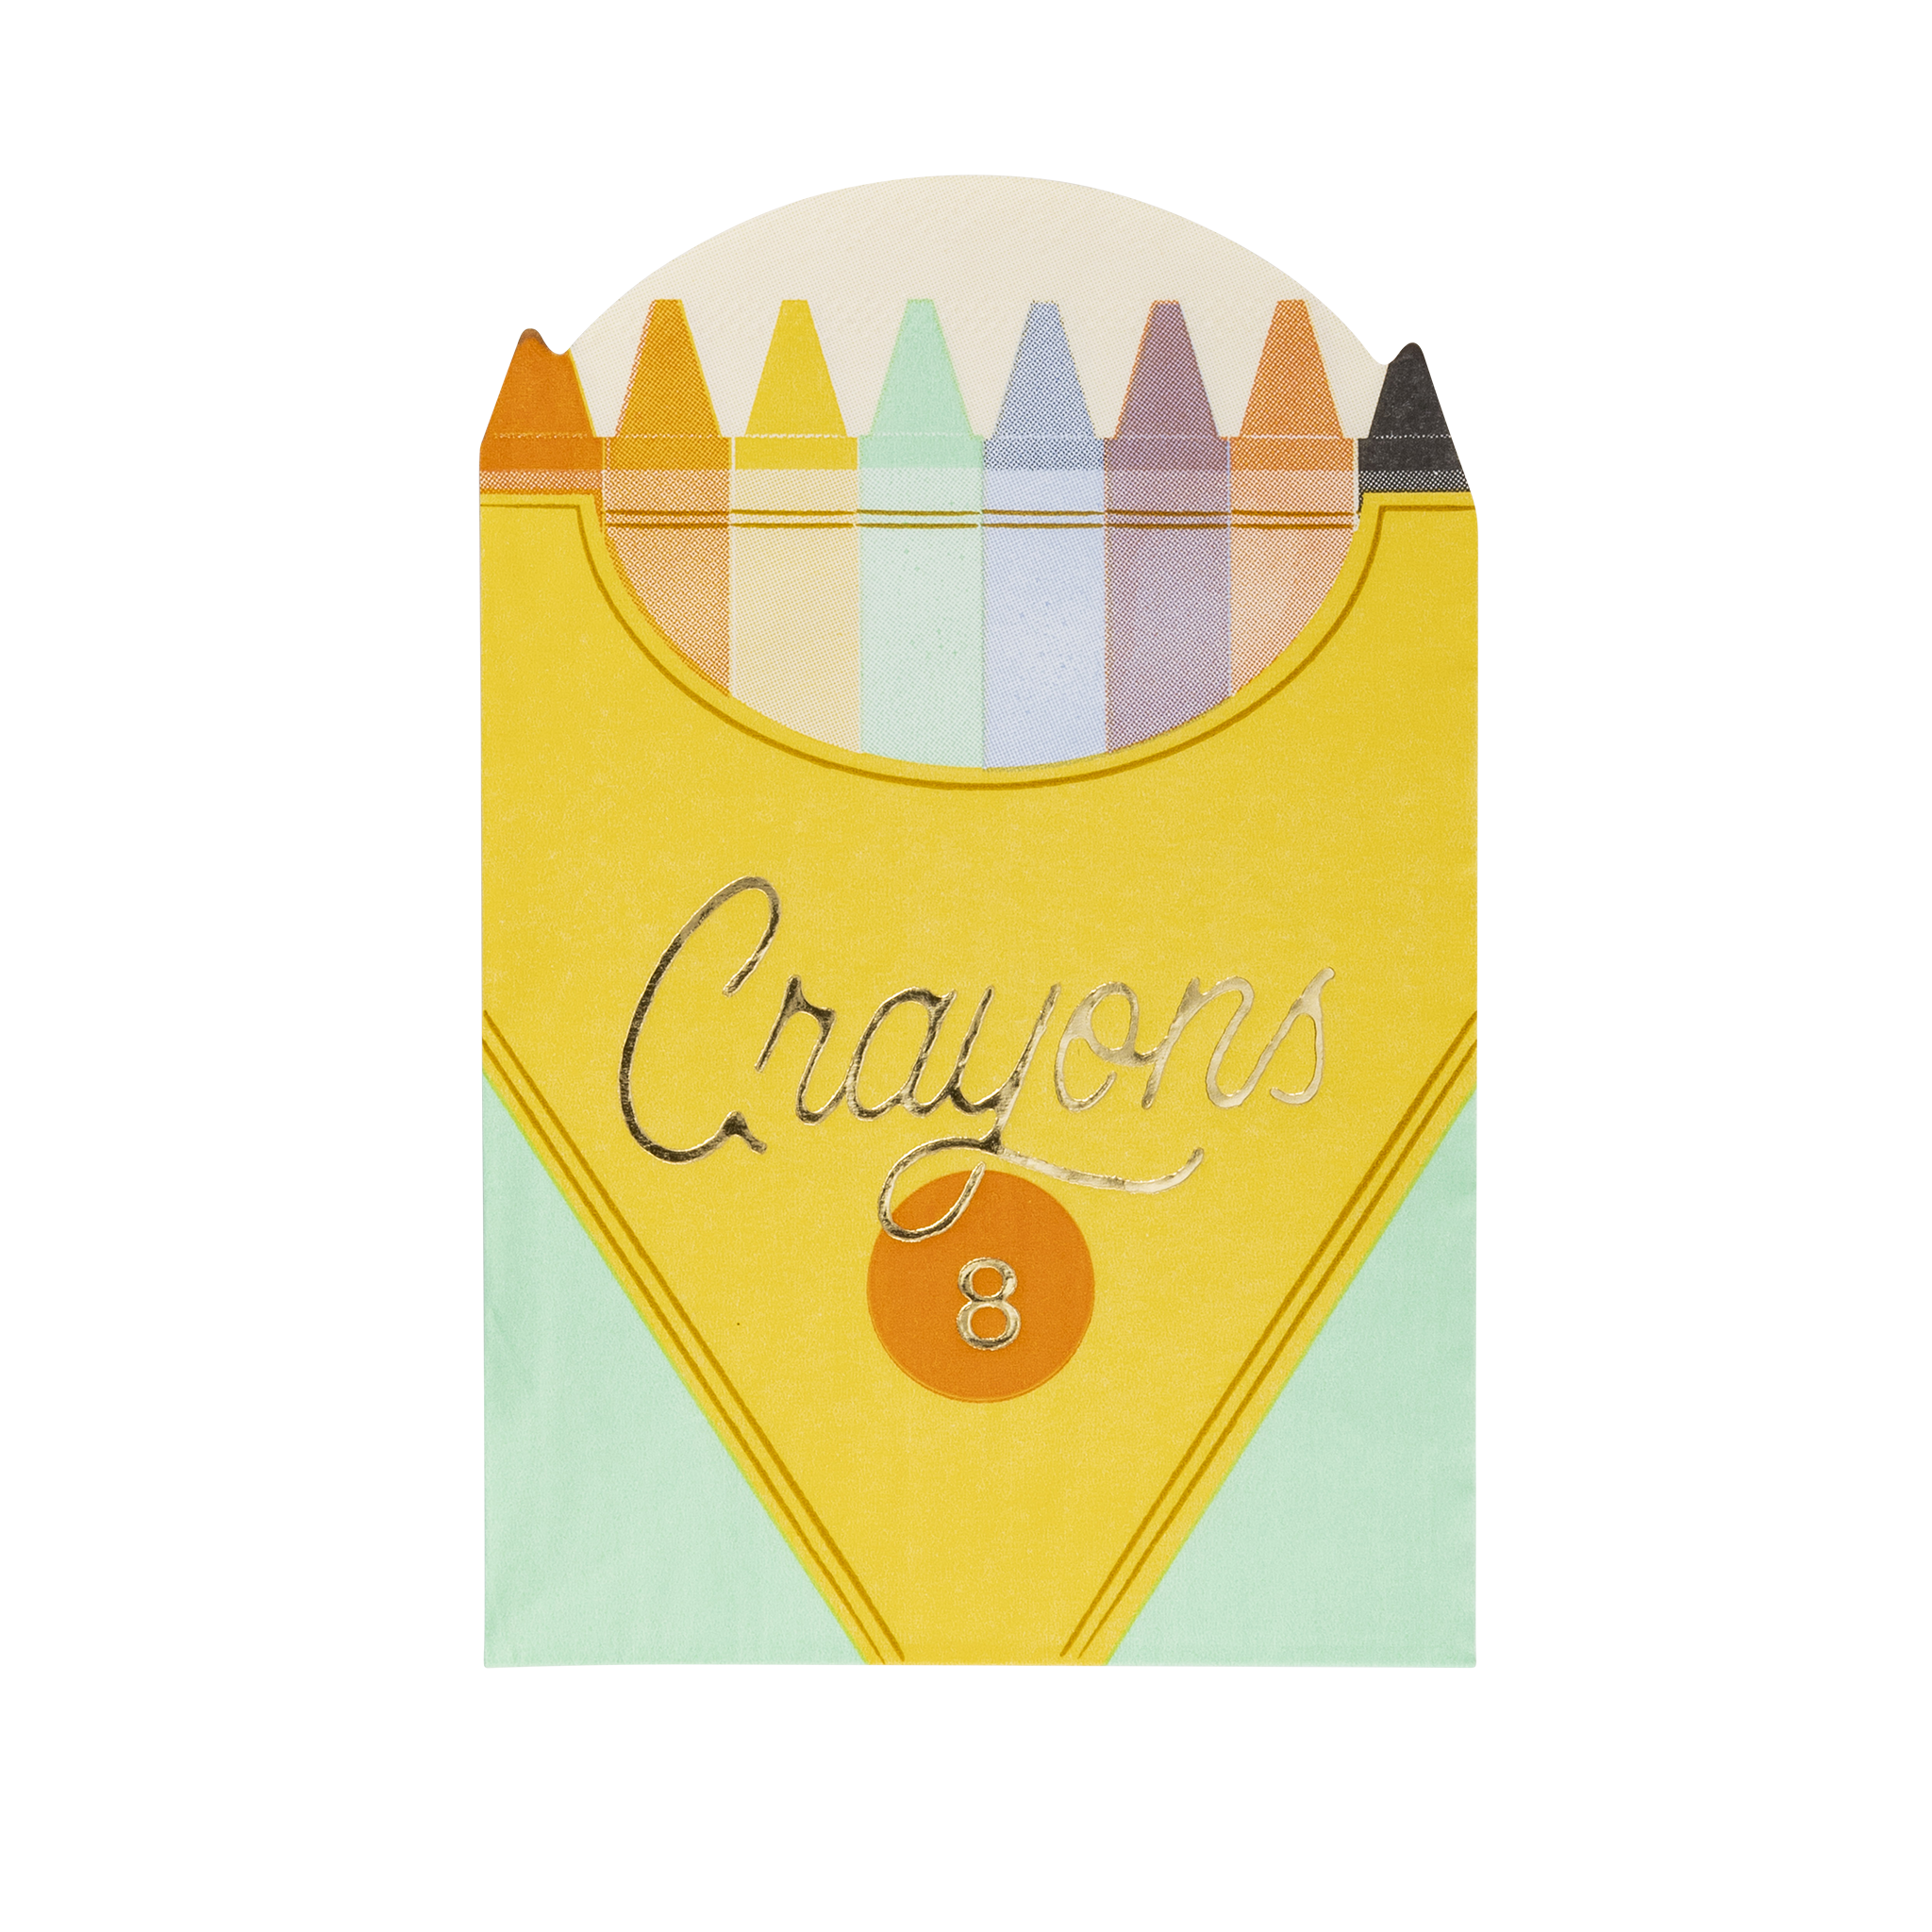 Crayon Box Napkin - 18 PK